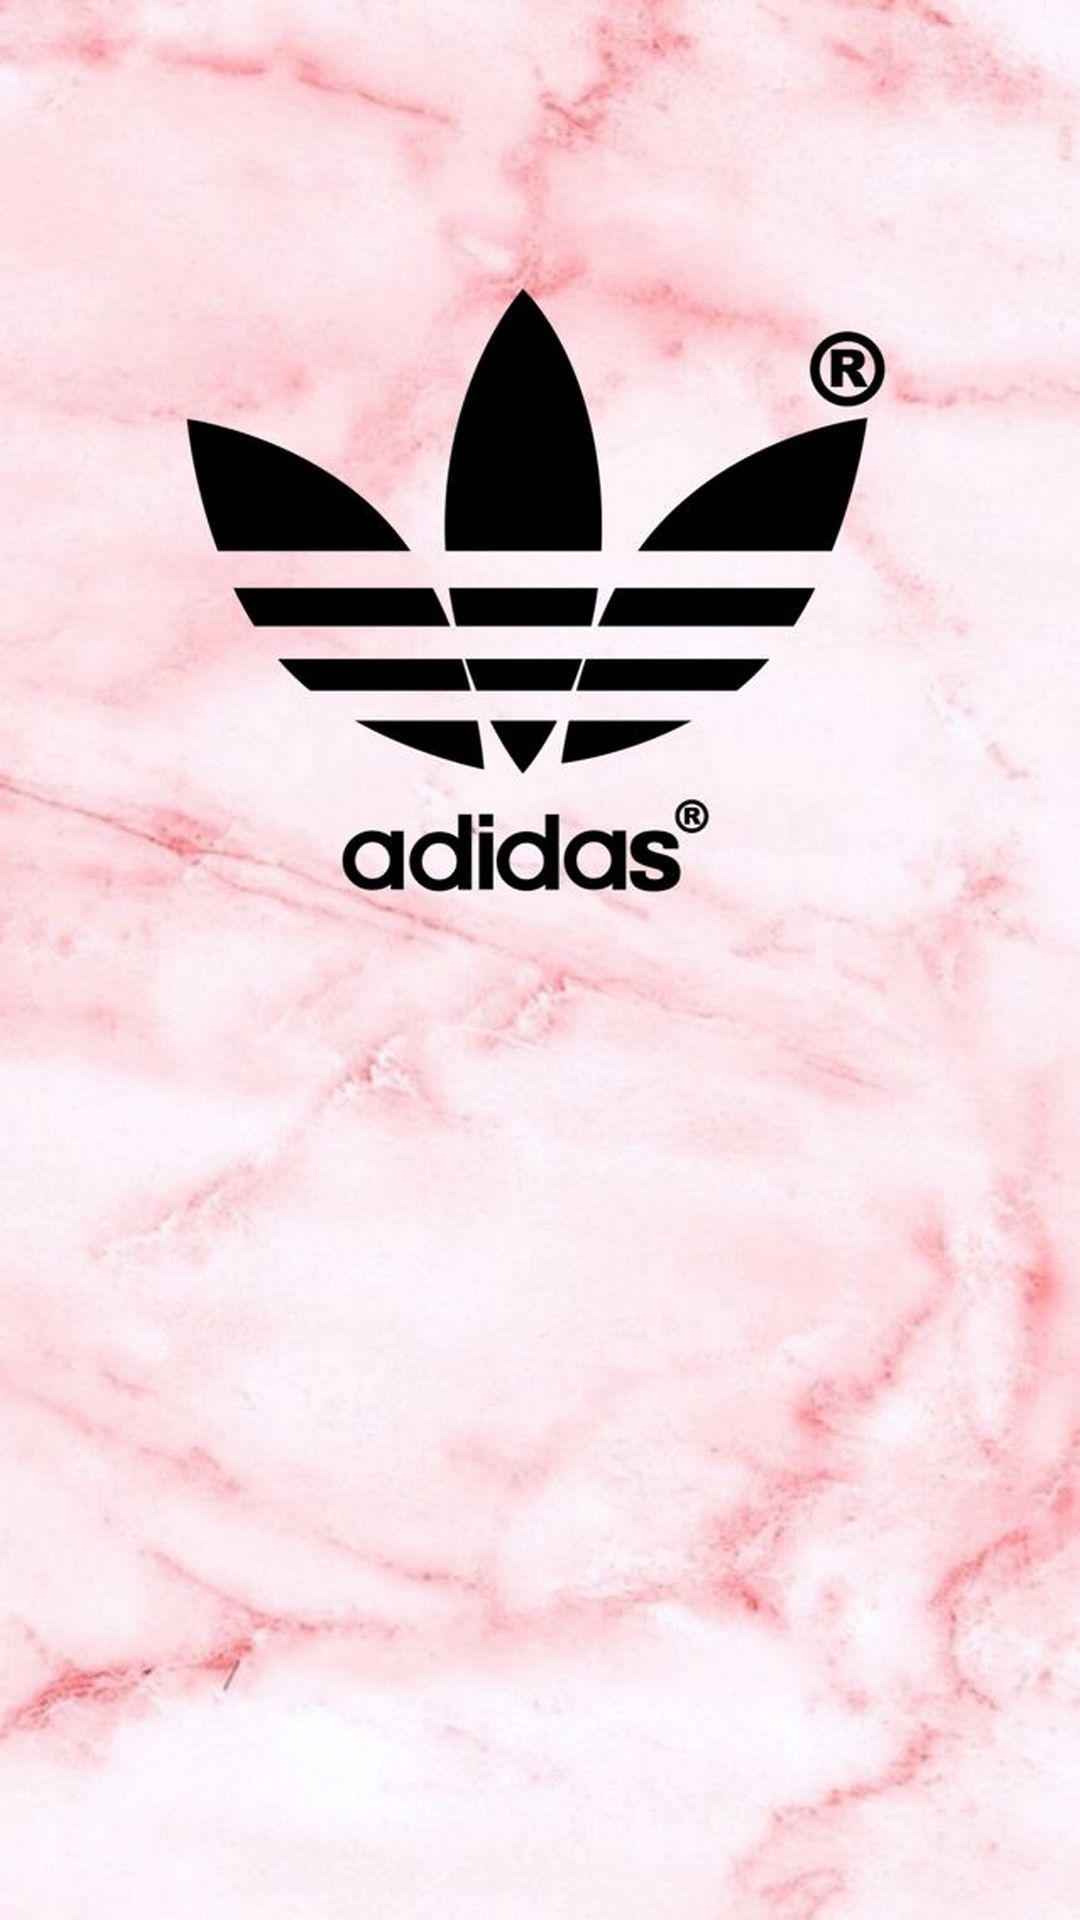 Adidas Wallpaper Android - Fondos de Android 2019